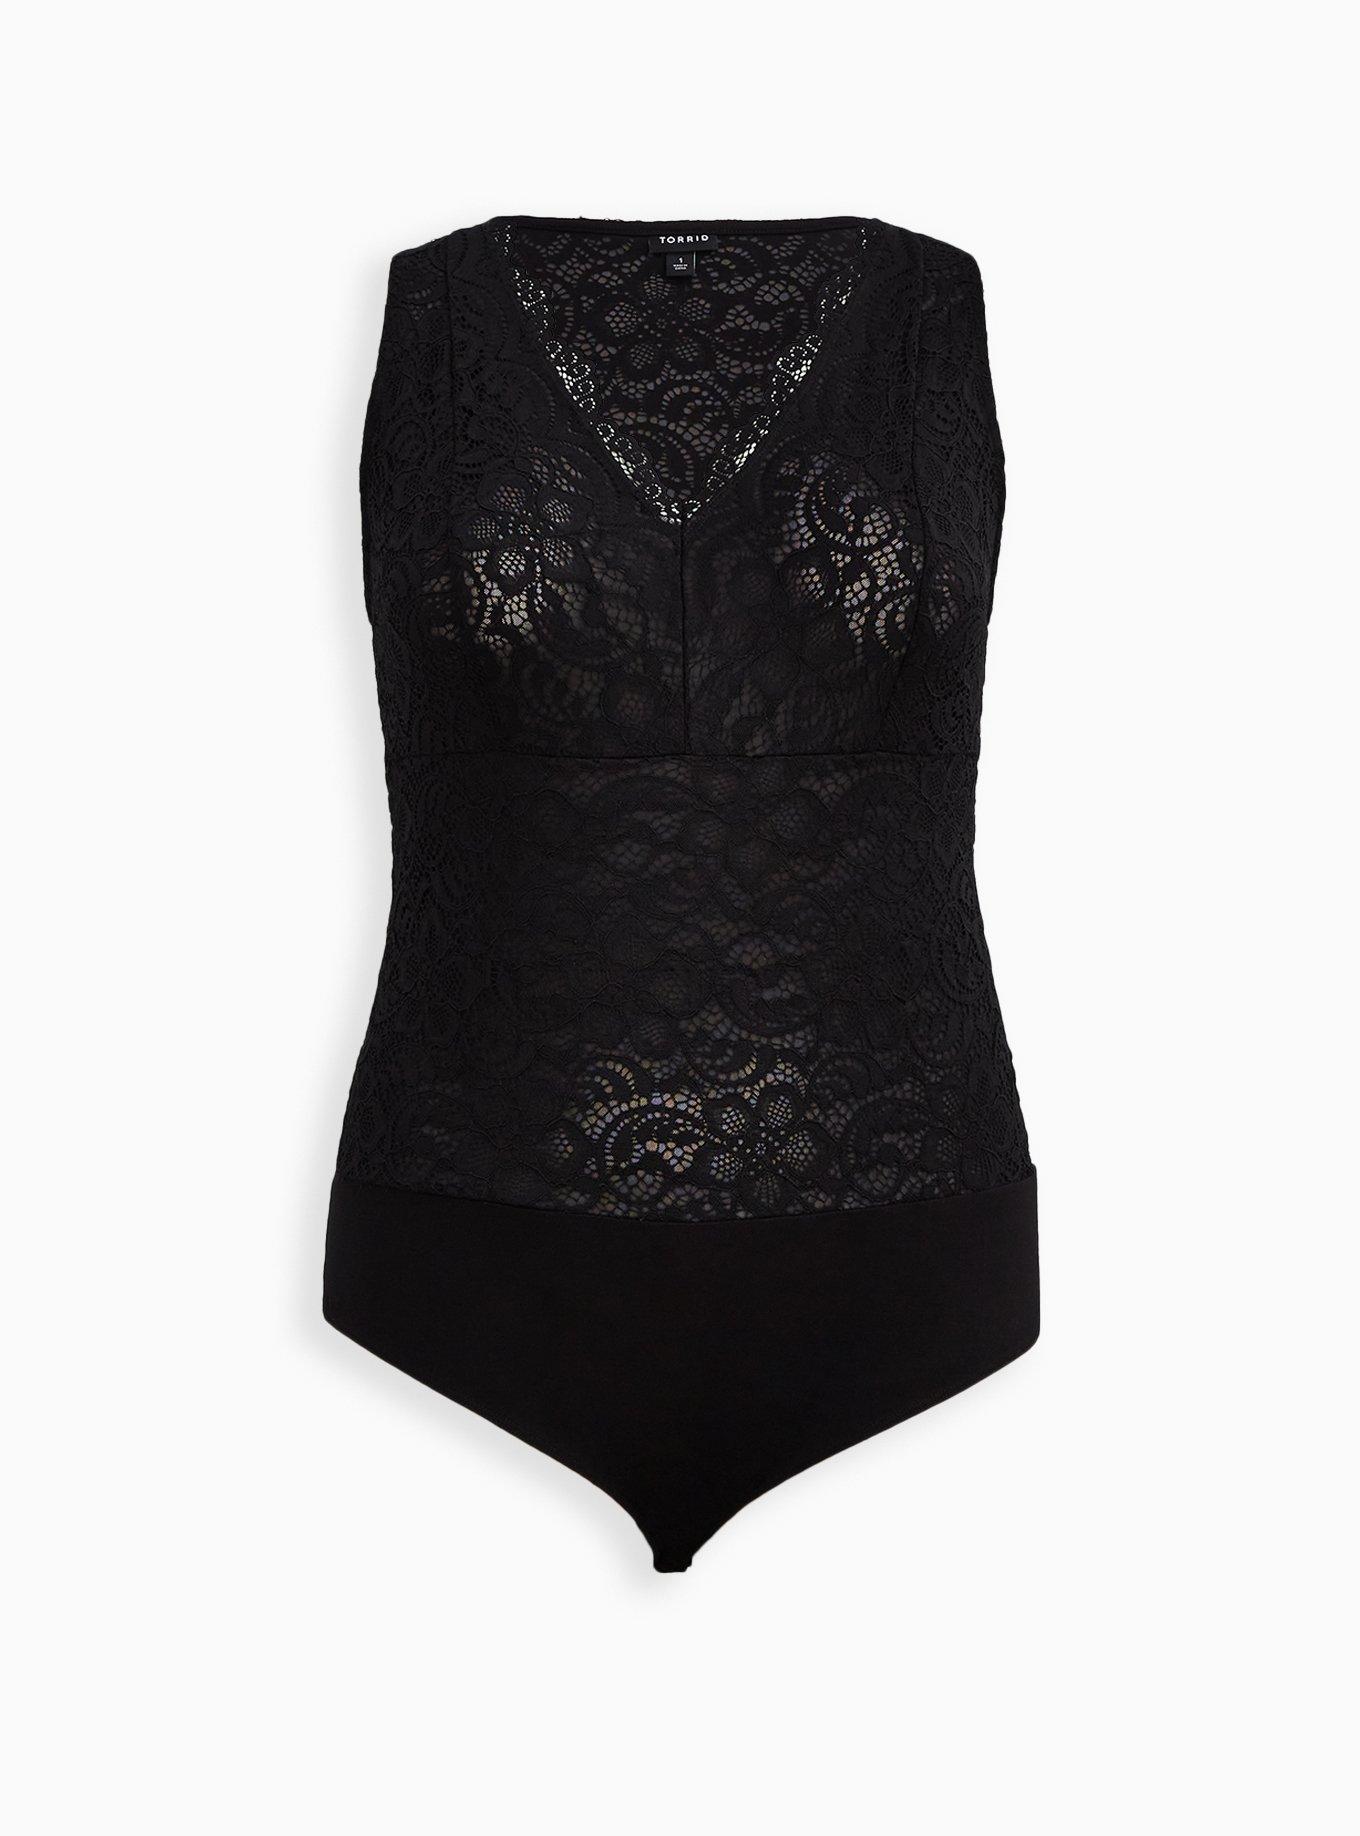 $150 Else Women's Black Cobweb Soft Triangle Lace Bodysuit Size XS